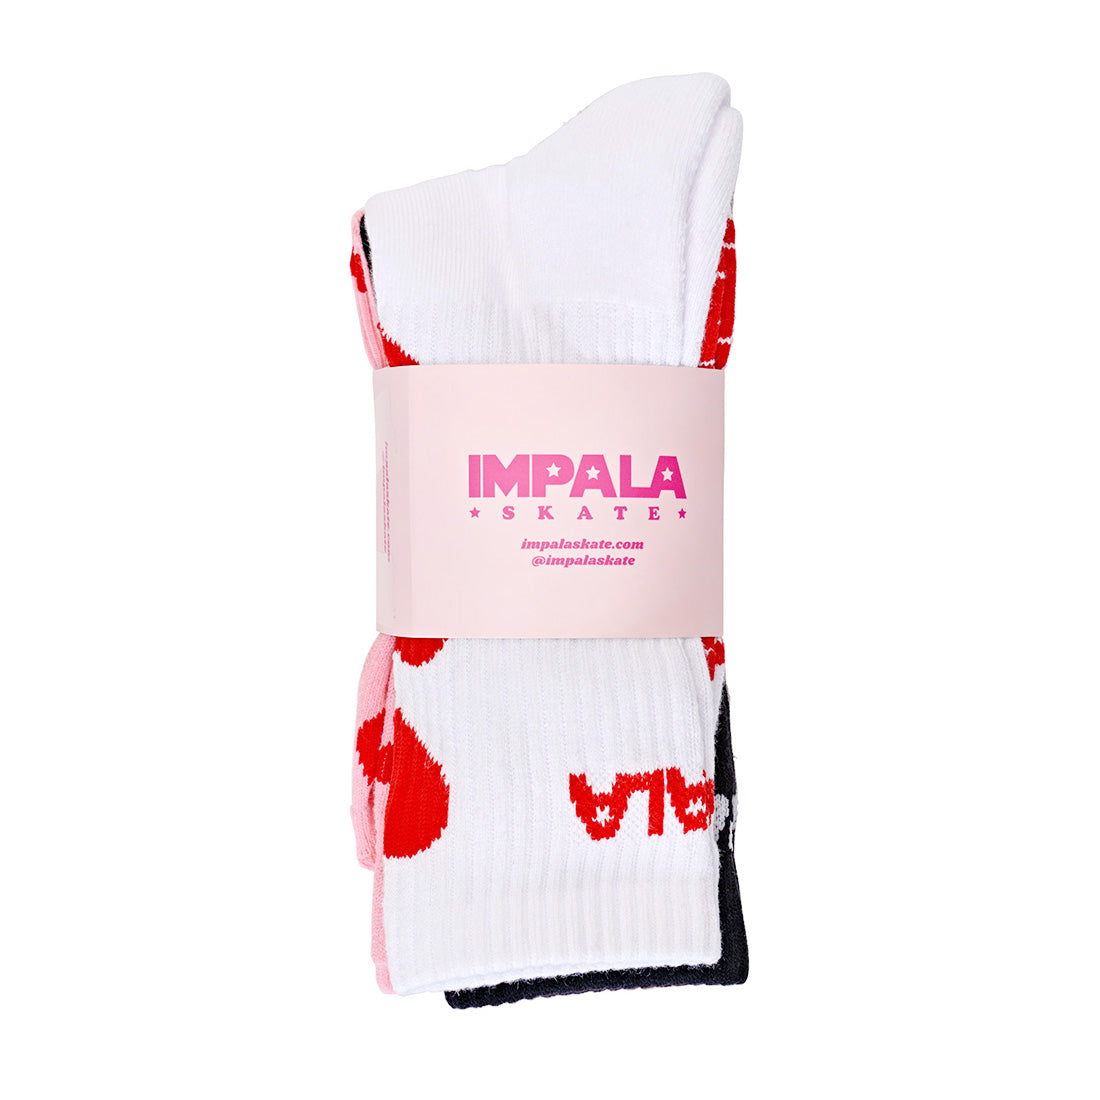 Impala Skate Crew Socks 3pk - Falling Hearts Apparel Socks